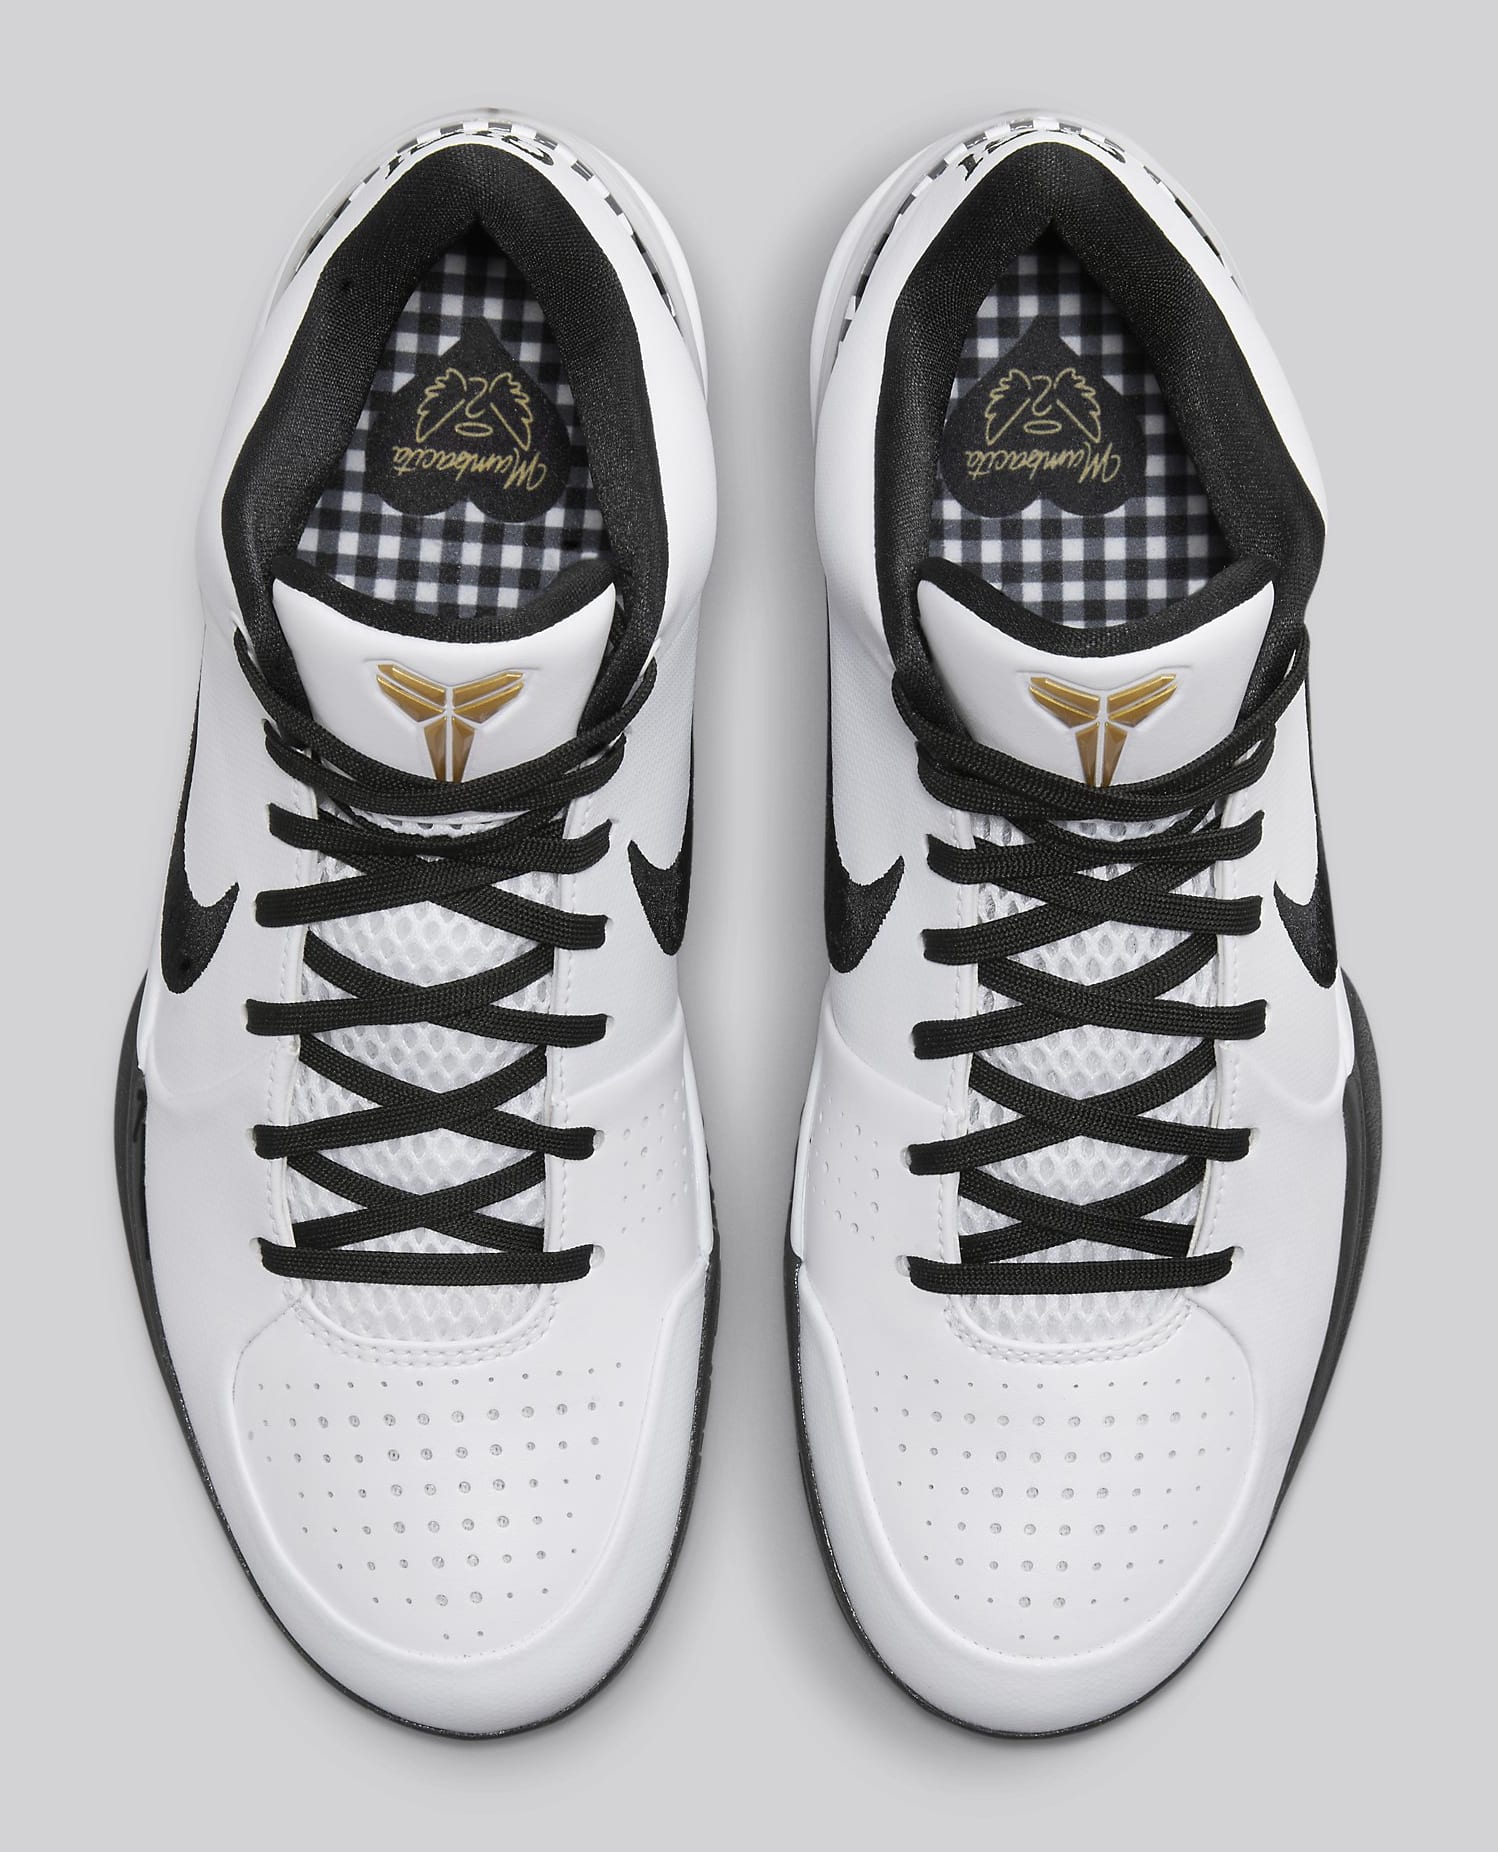 Official Look at the 'Gigi' Nike Kobe 4 Protro